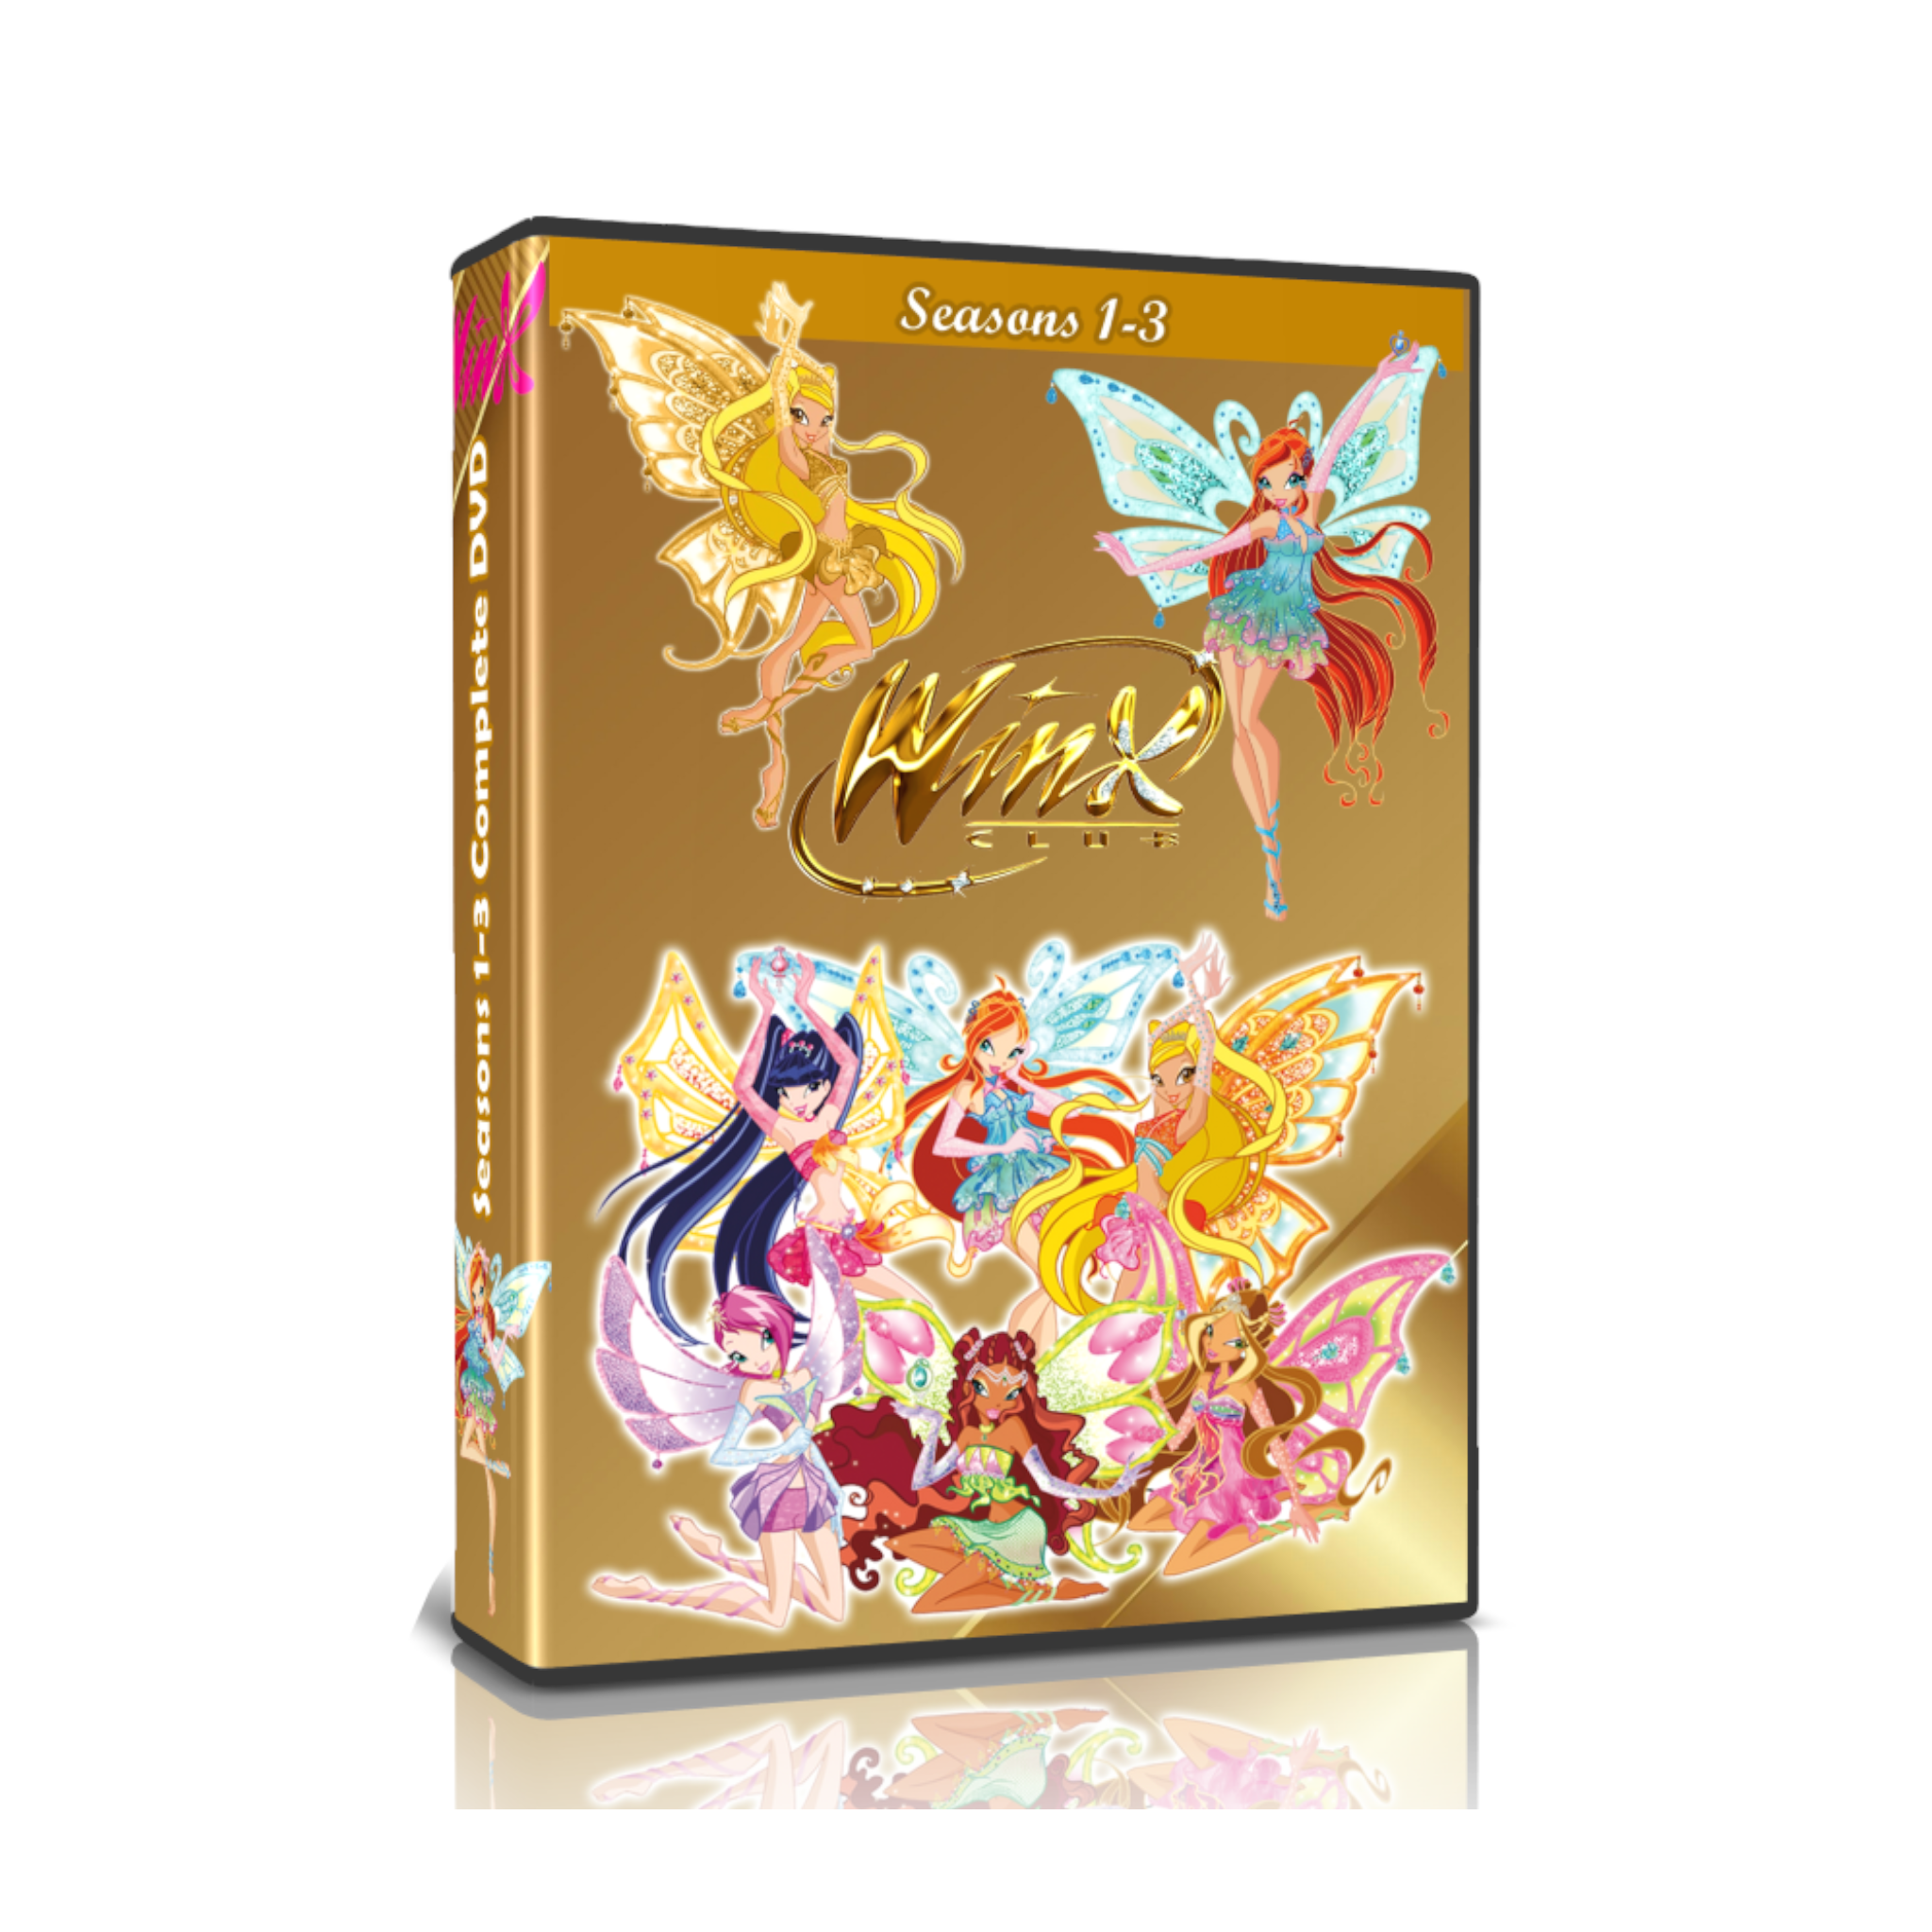 Pokemon Anime TV Series Complete Seasons 1-7 (1 2 3 4 5 6 & 7) NEW DVD SET